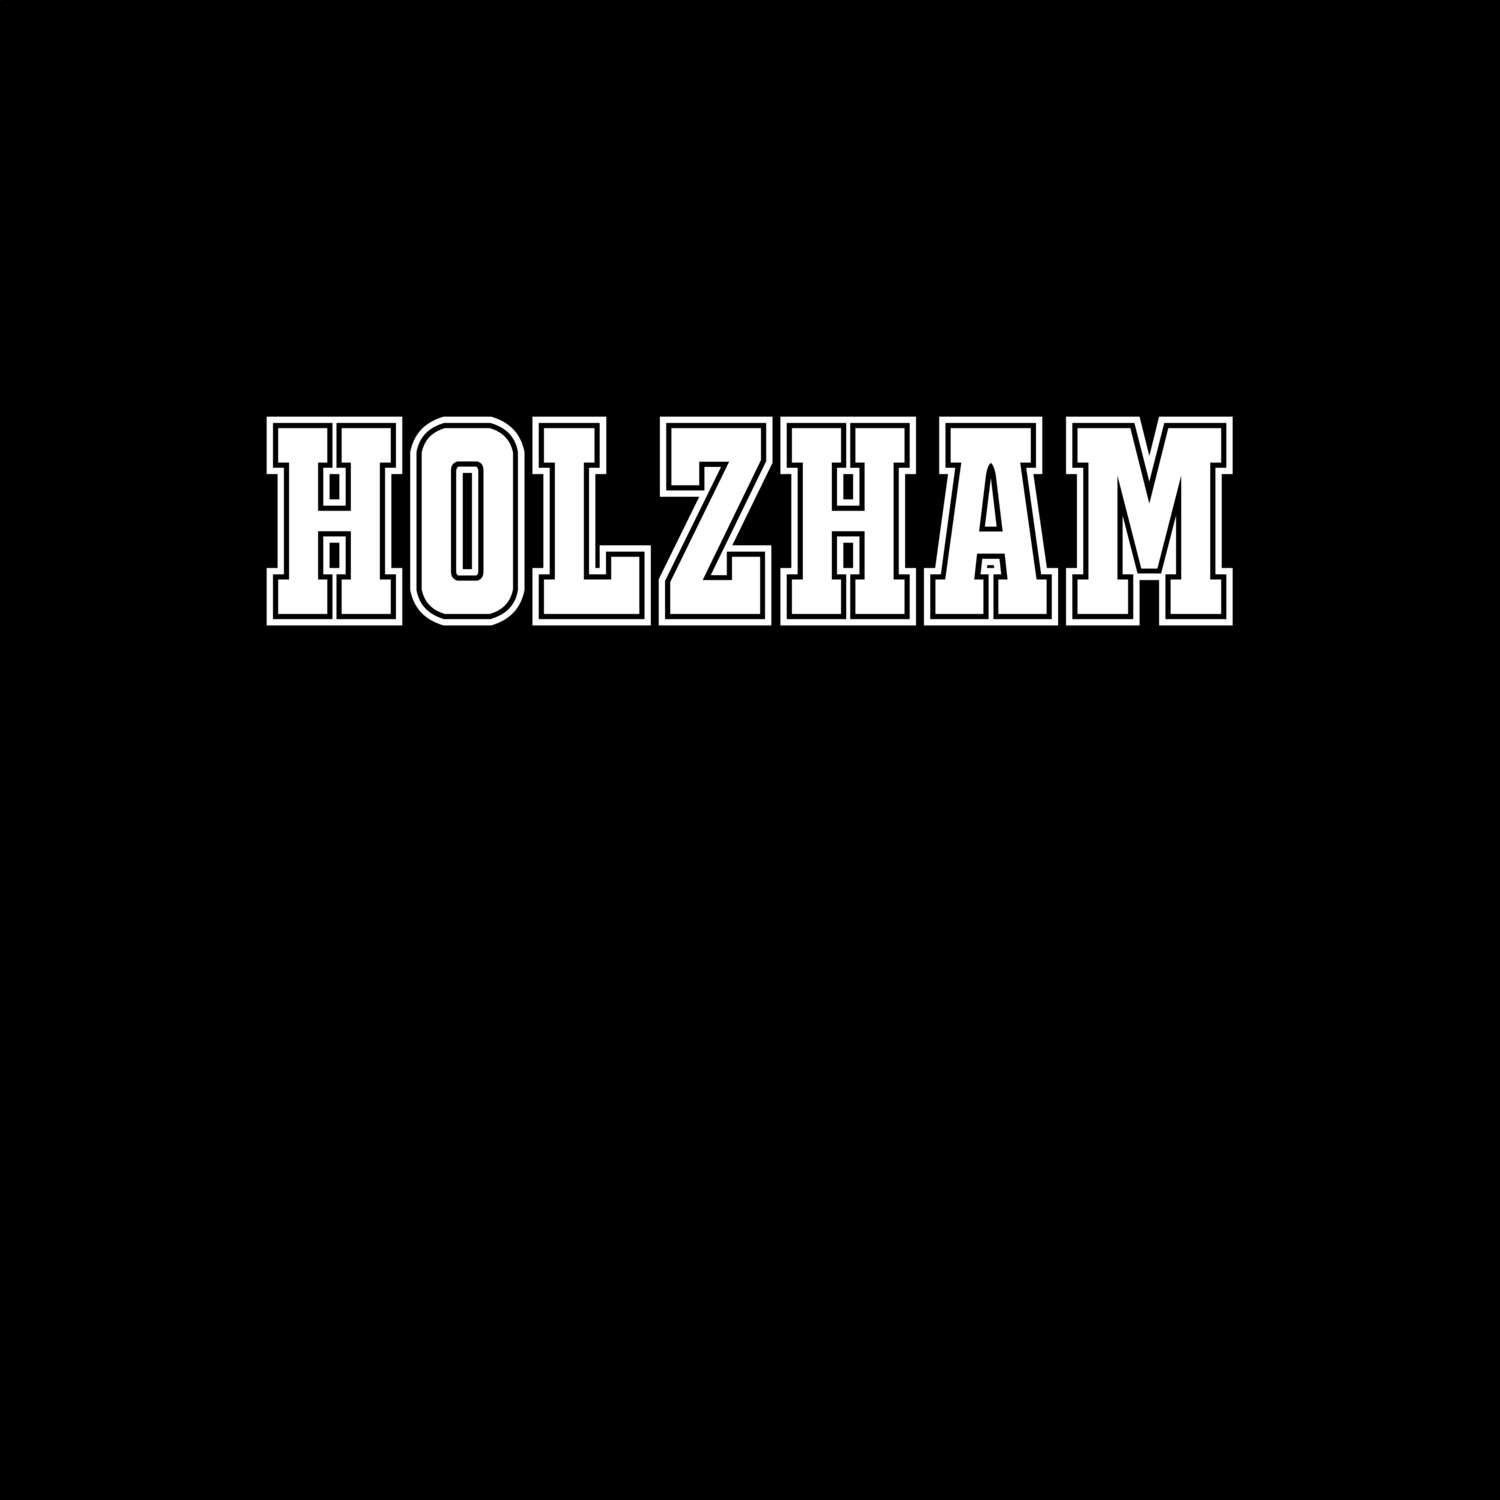 Holzham T-Shirt »Classic«